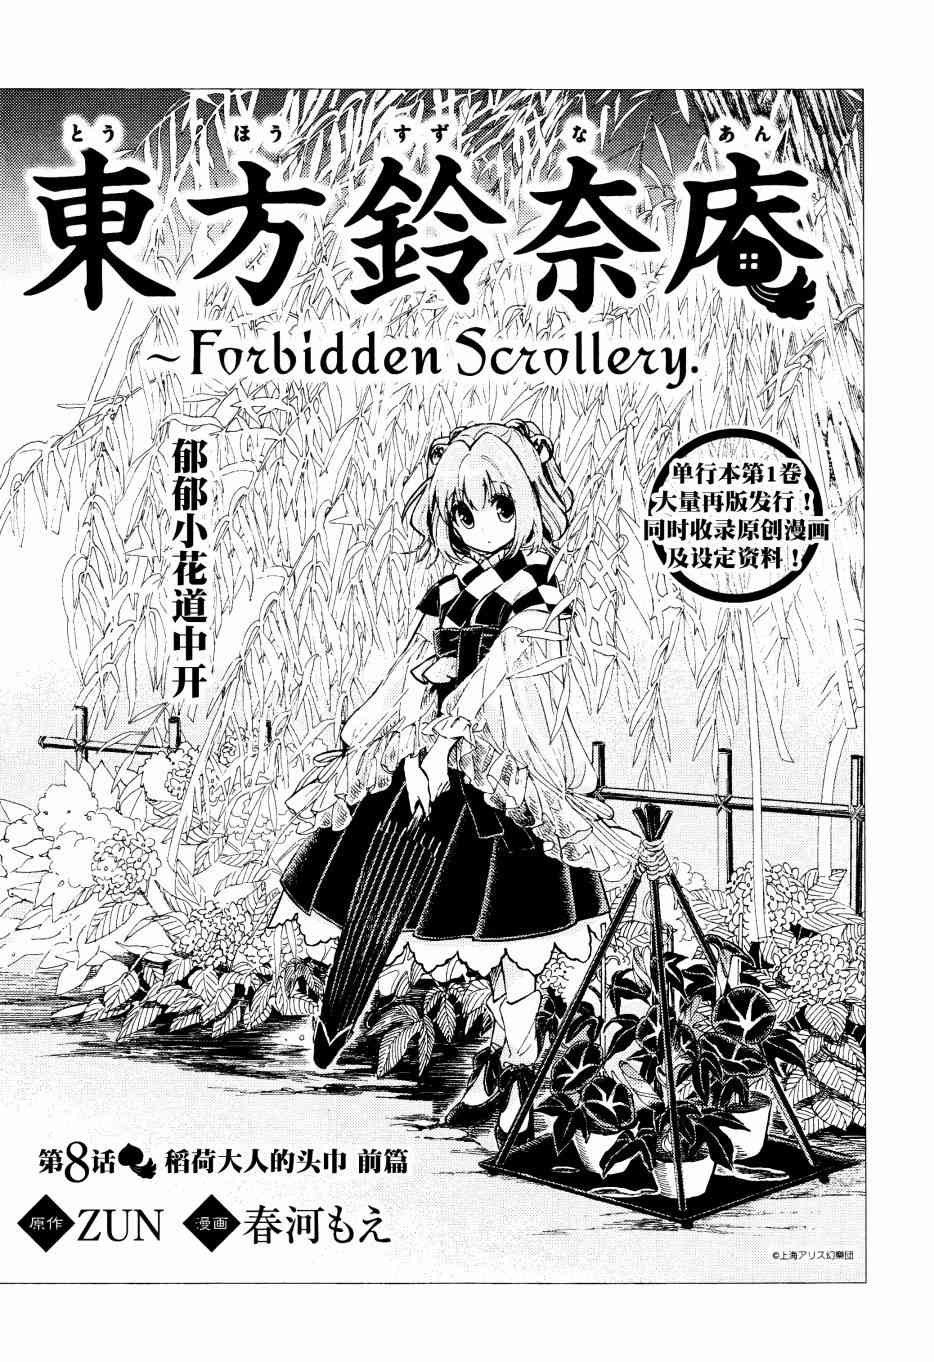 東方鈴奈庵 ~ Forbidden Scrollery - 8話 - 1